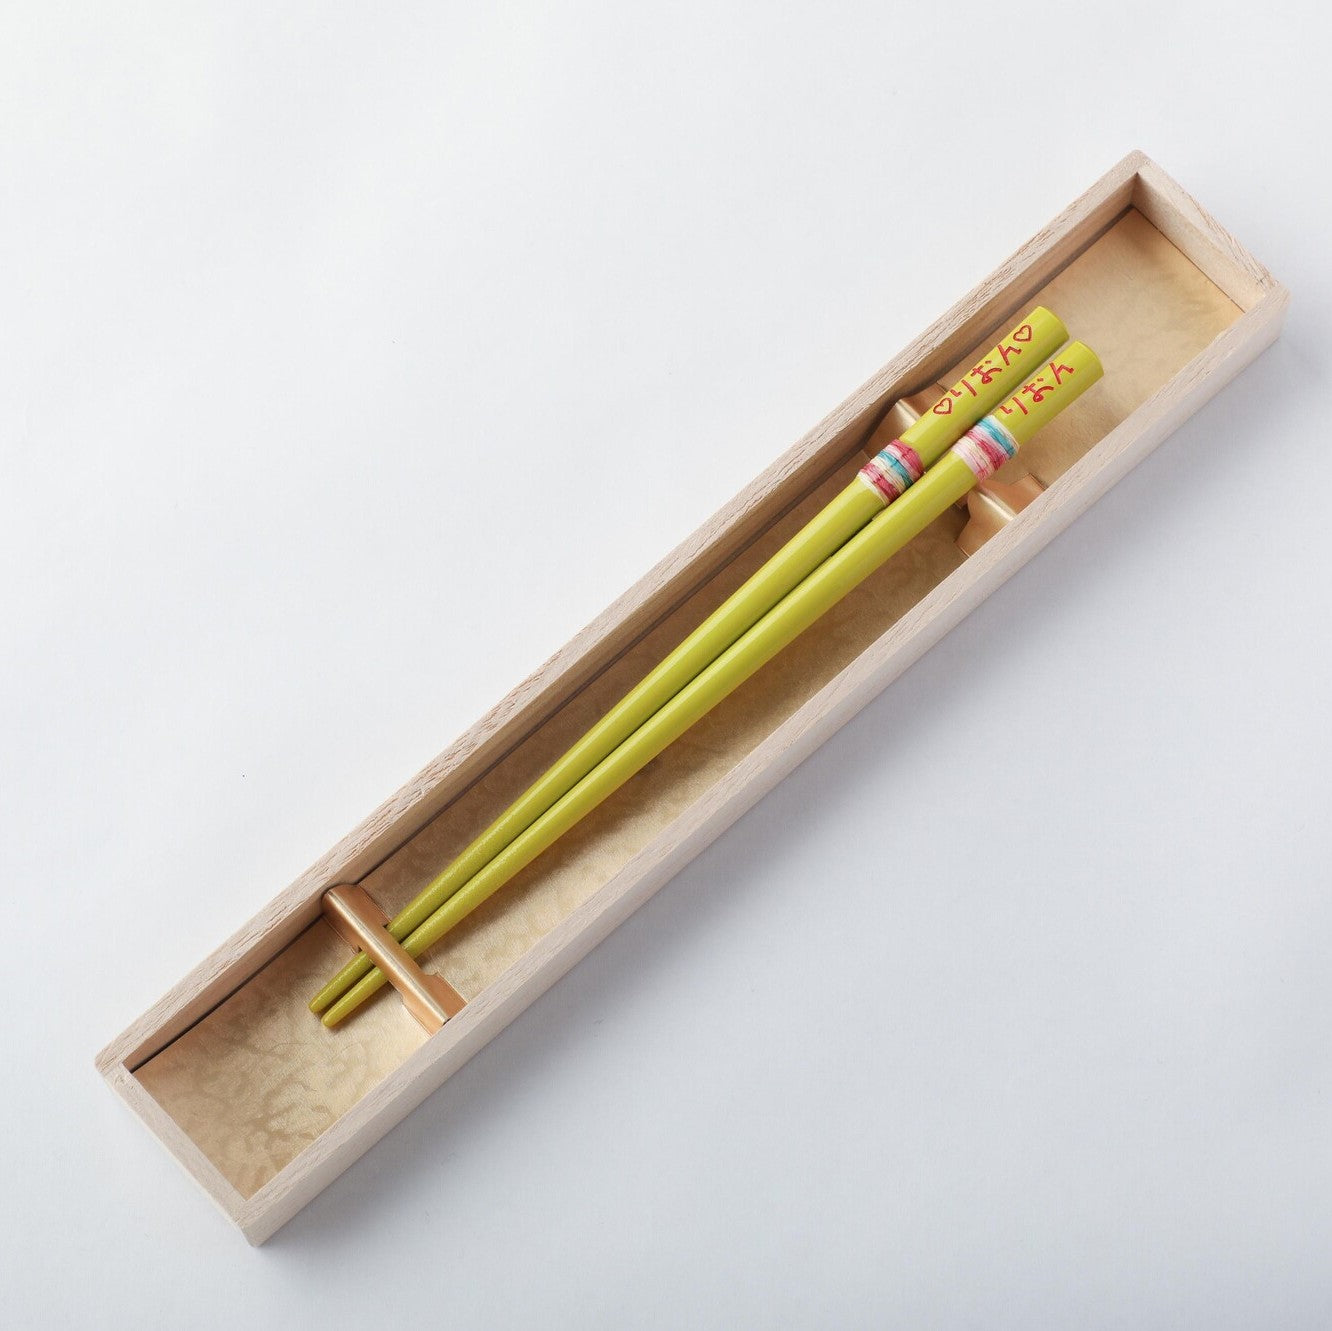 Hula hoop kids Japanese chopsticks yellow blue pink sky blue - SINGLE PAIR WITH ENGRAVED WOODEN BOX SET